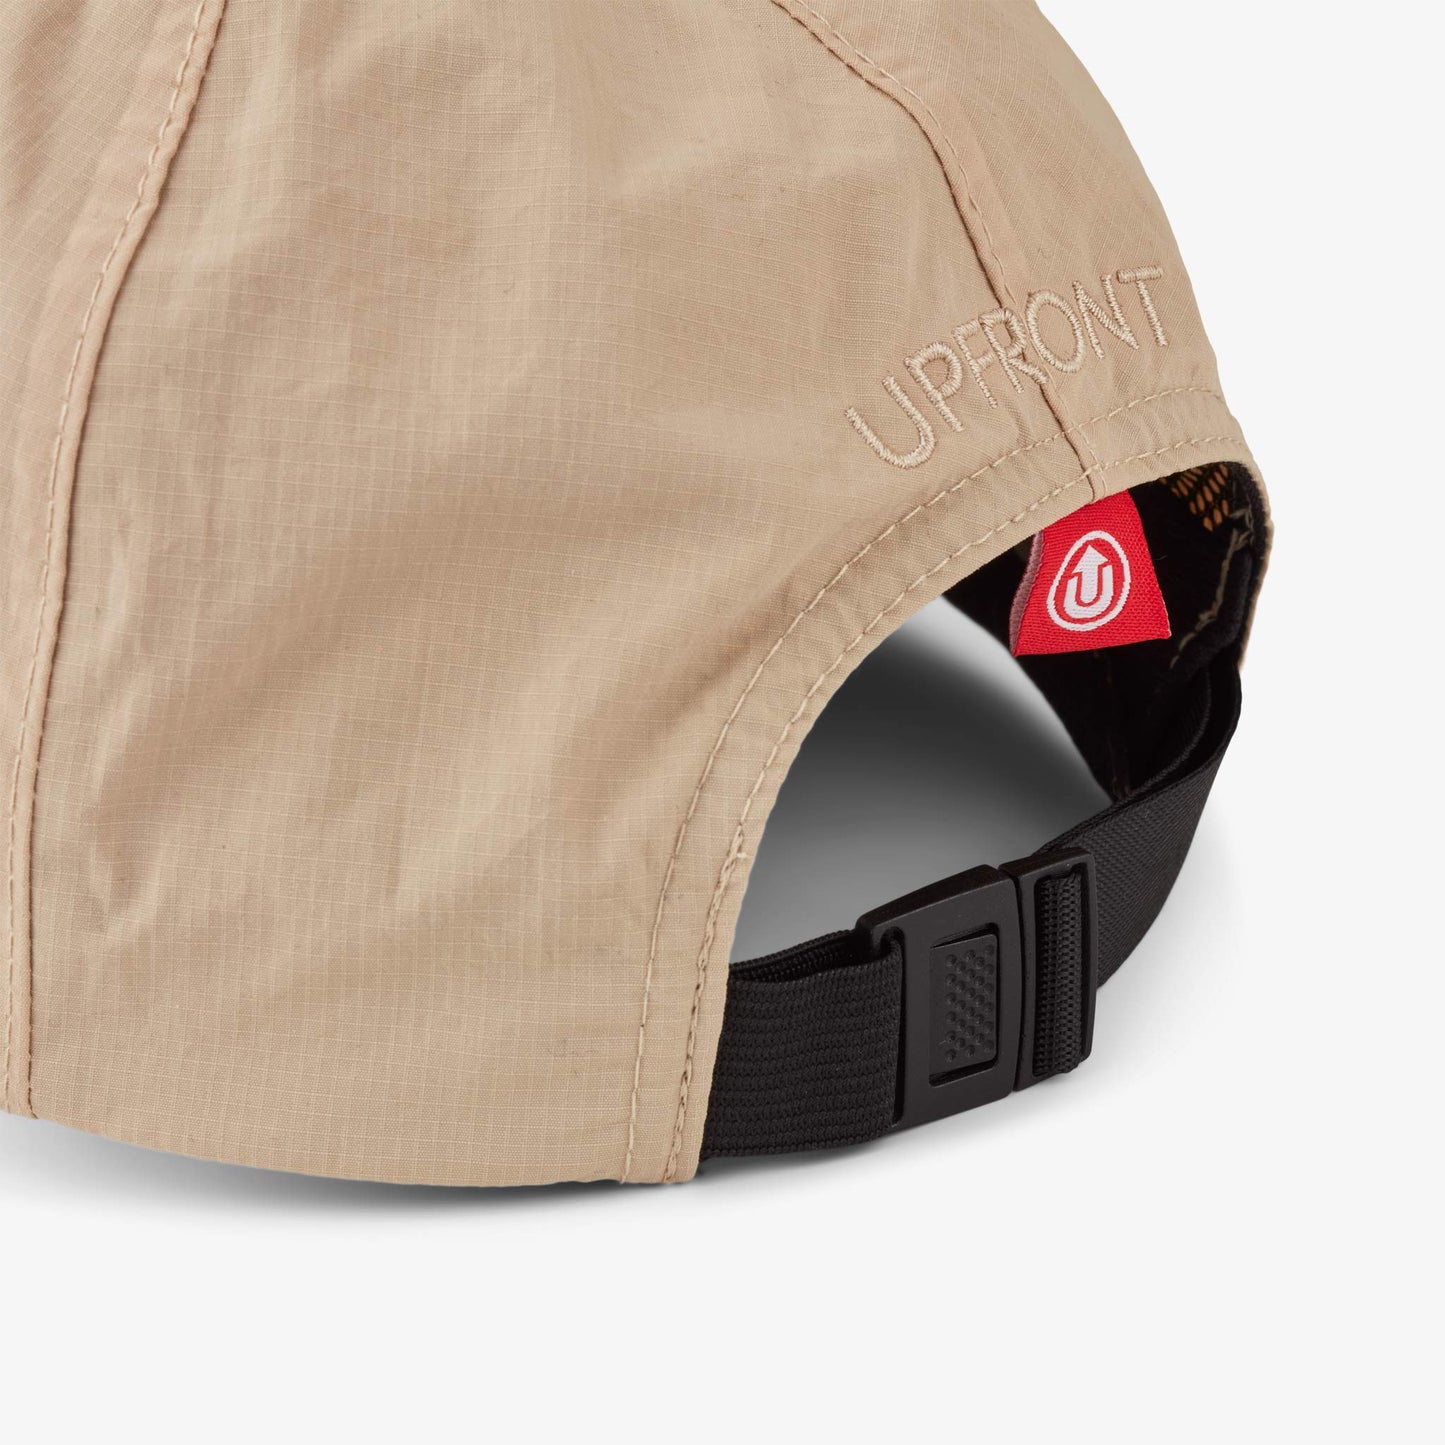 Upfront Nordic Headwear - Jim - Soft Low Baseball Cap - Smoke Grey - Headz Up 